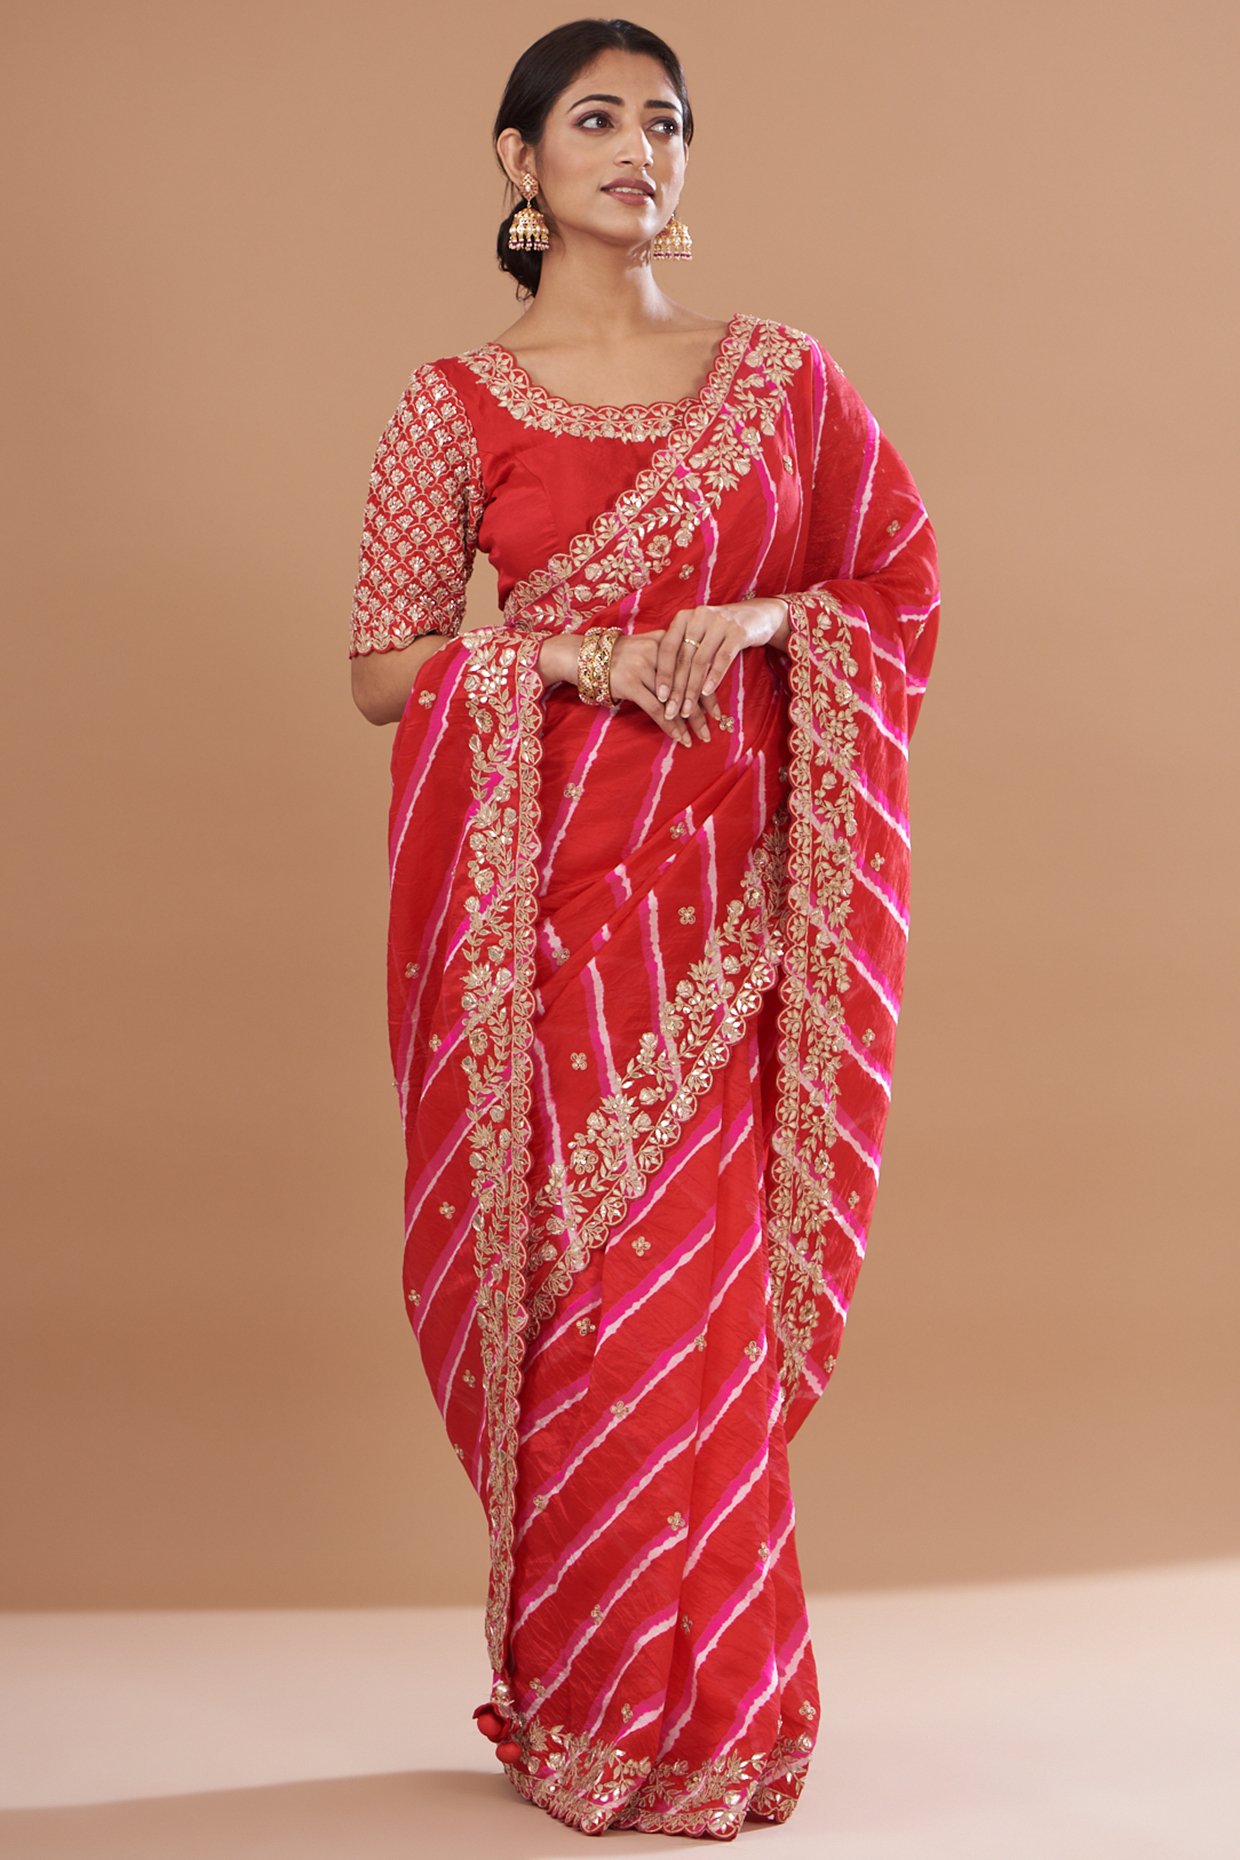 Georgette Fabric Bollywood Designer Leheriya Sarees Nr Vjt at Rs 1399.00 |  Subhash Chowk | Sikar| ID: 26398871730